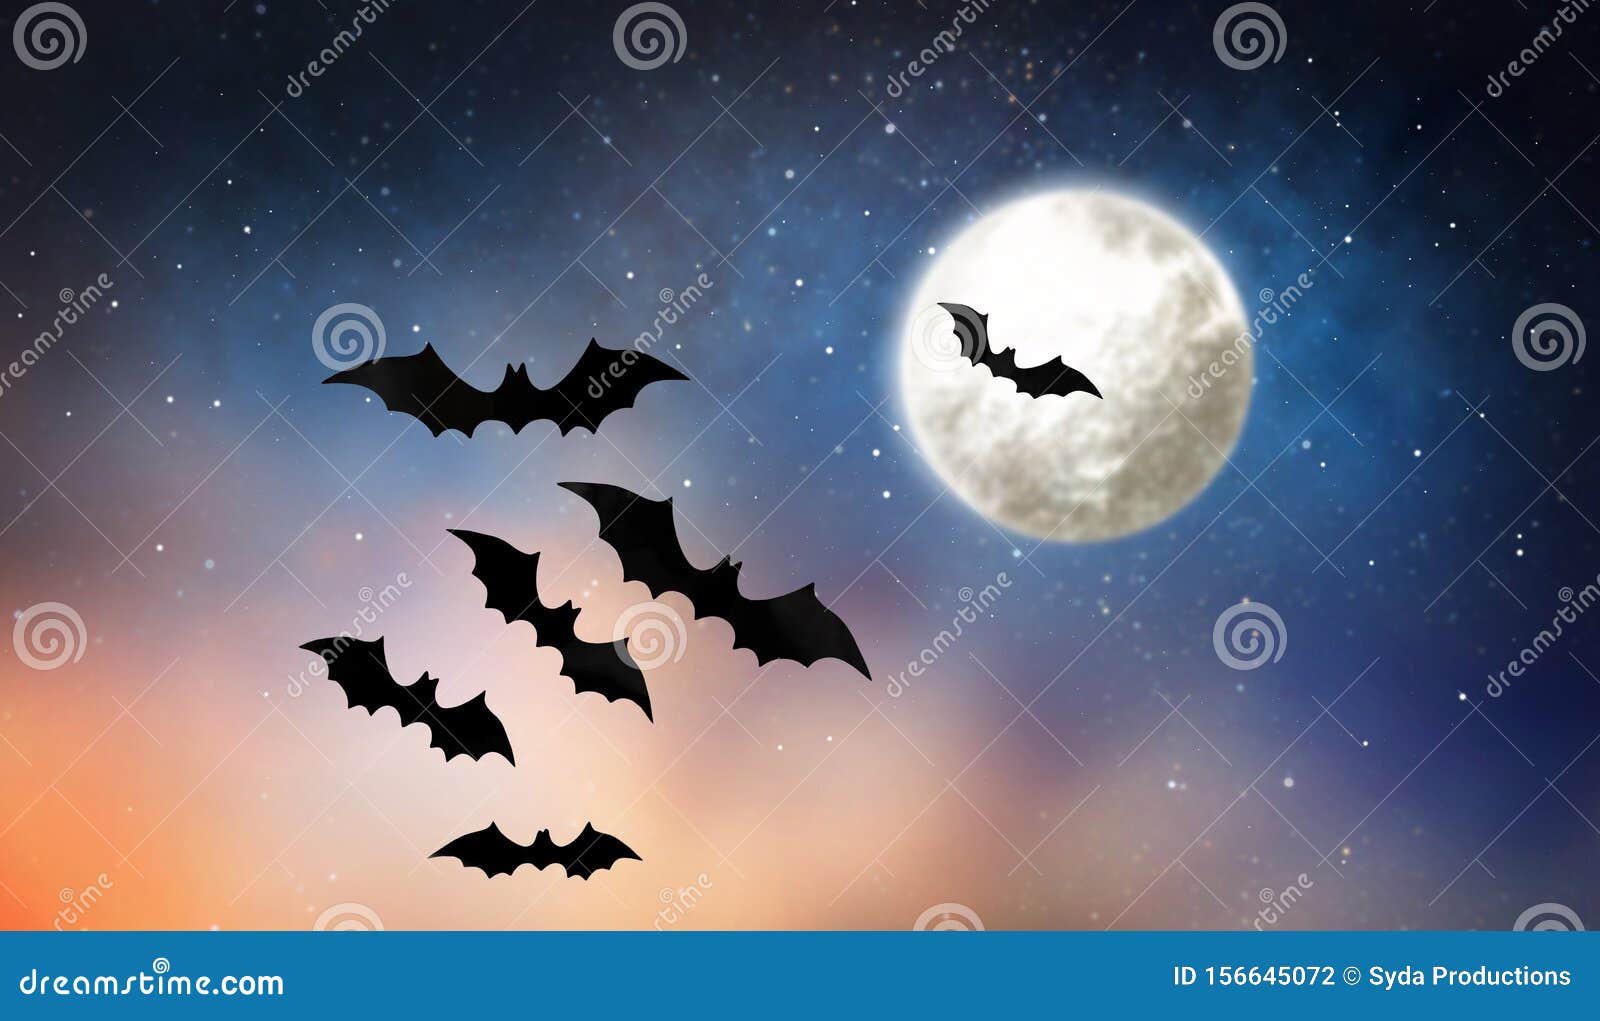 Black bat in a pumpkin field during a full moon wood ornament painting